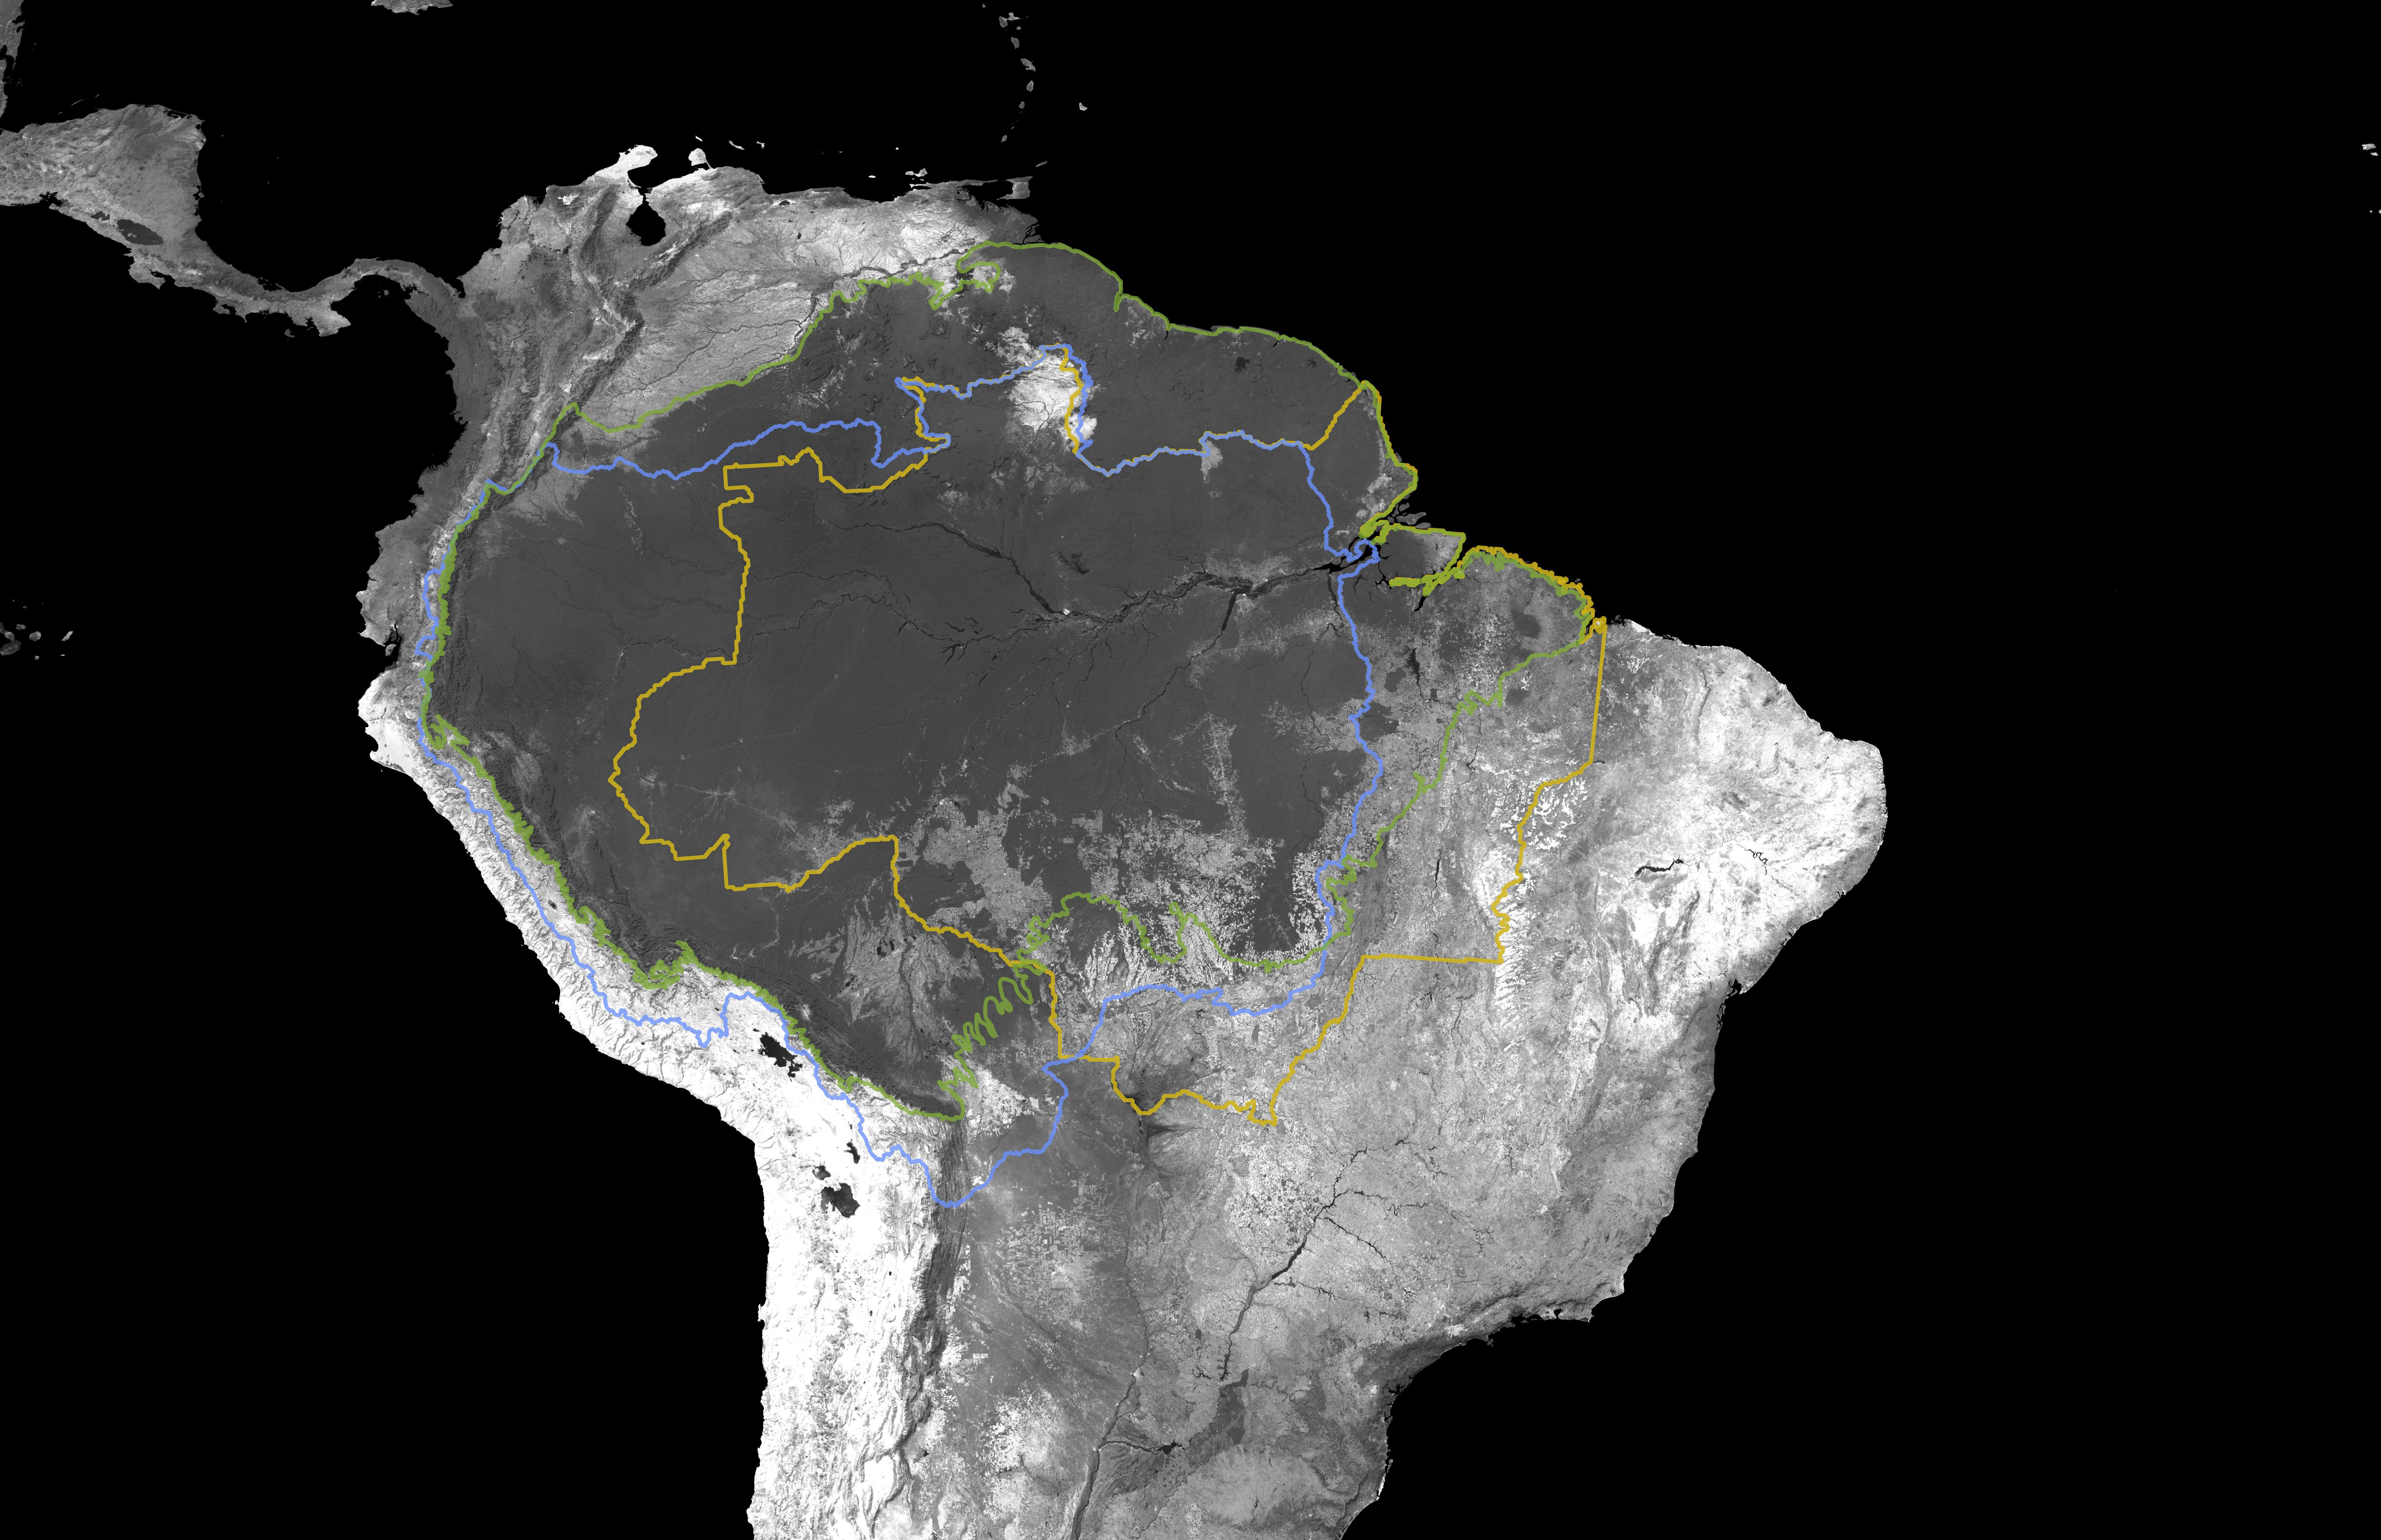 amazon basin map location